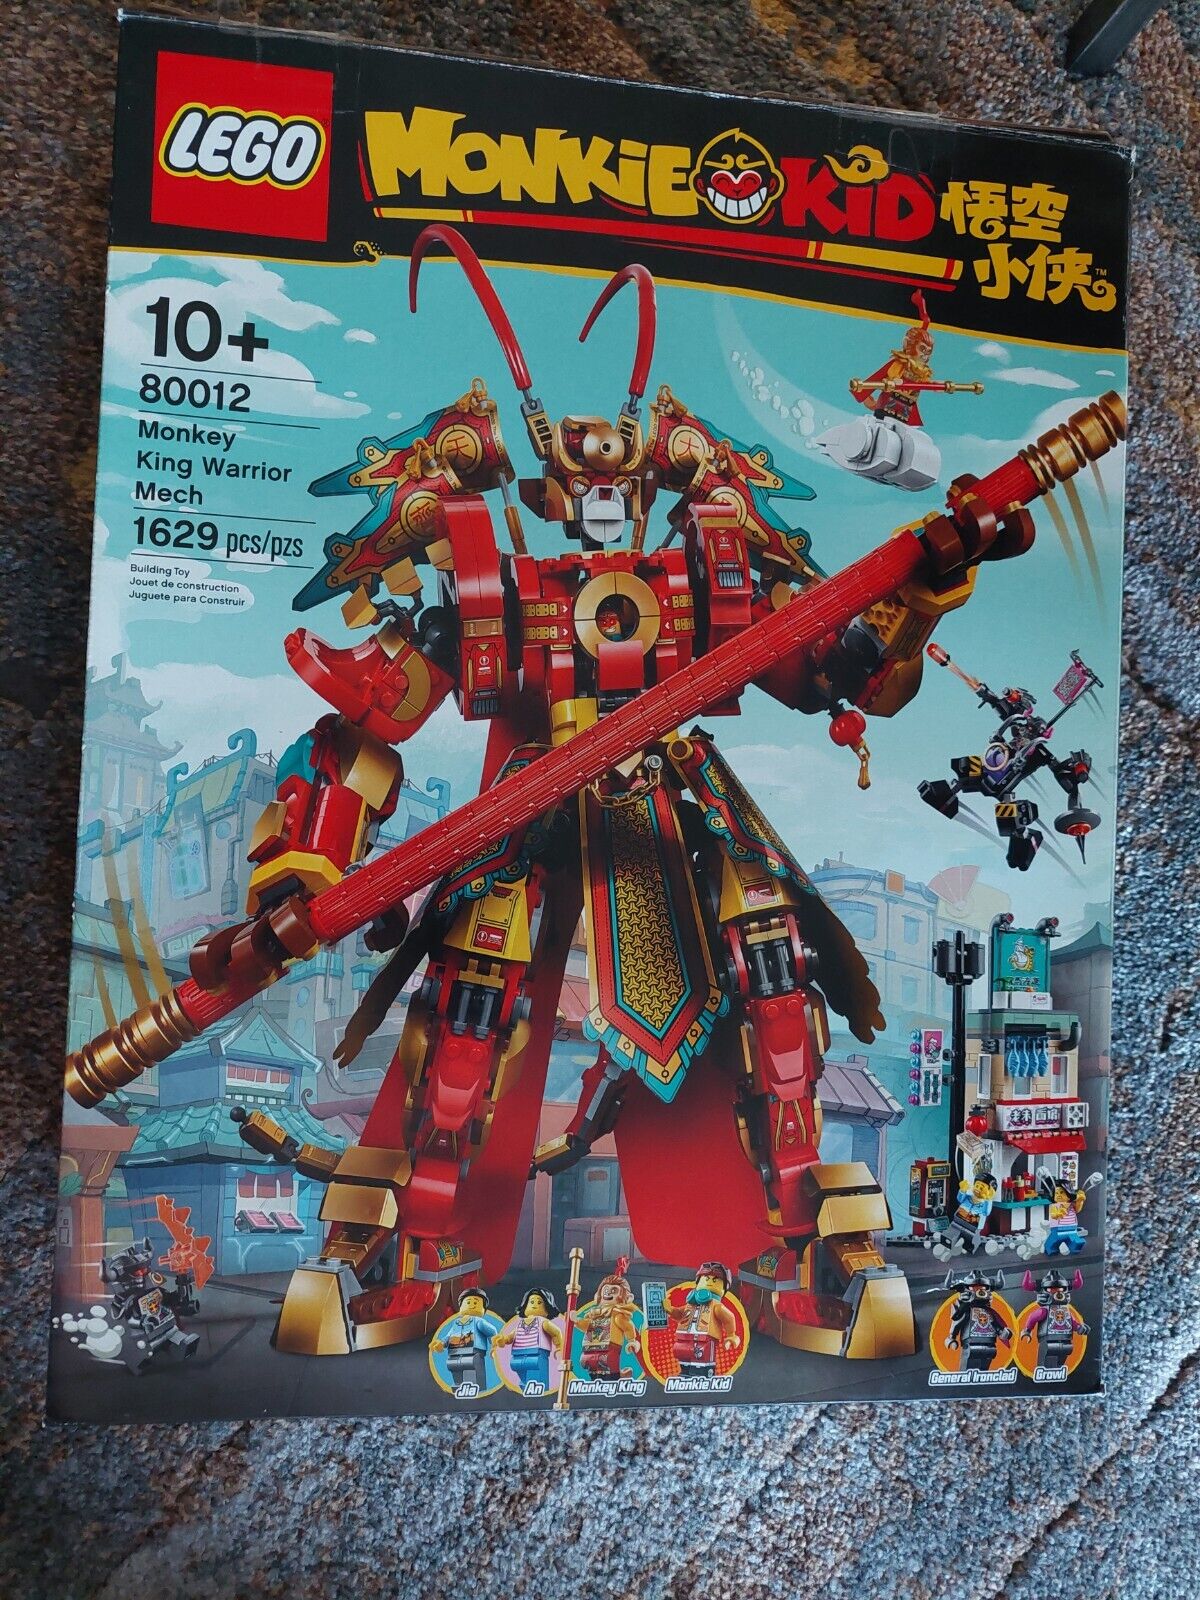 Monkey King Warrior Mech:  LEGO set 80012